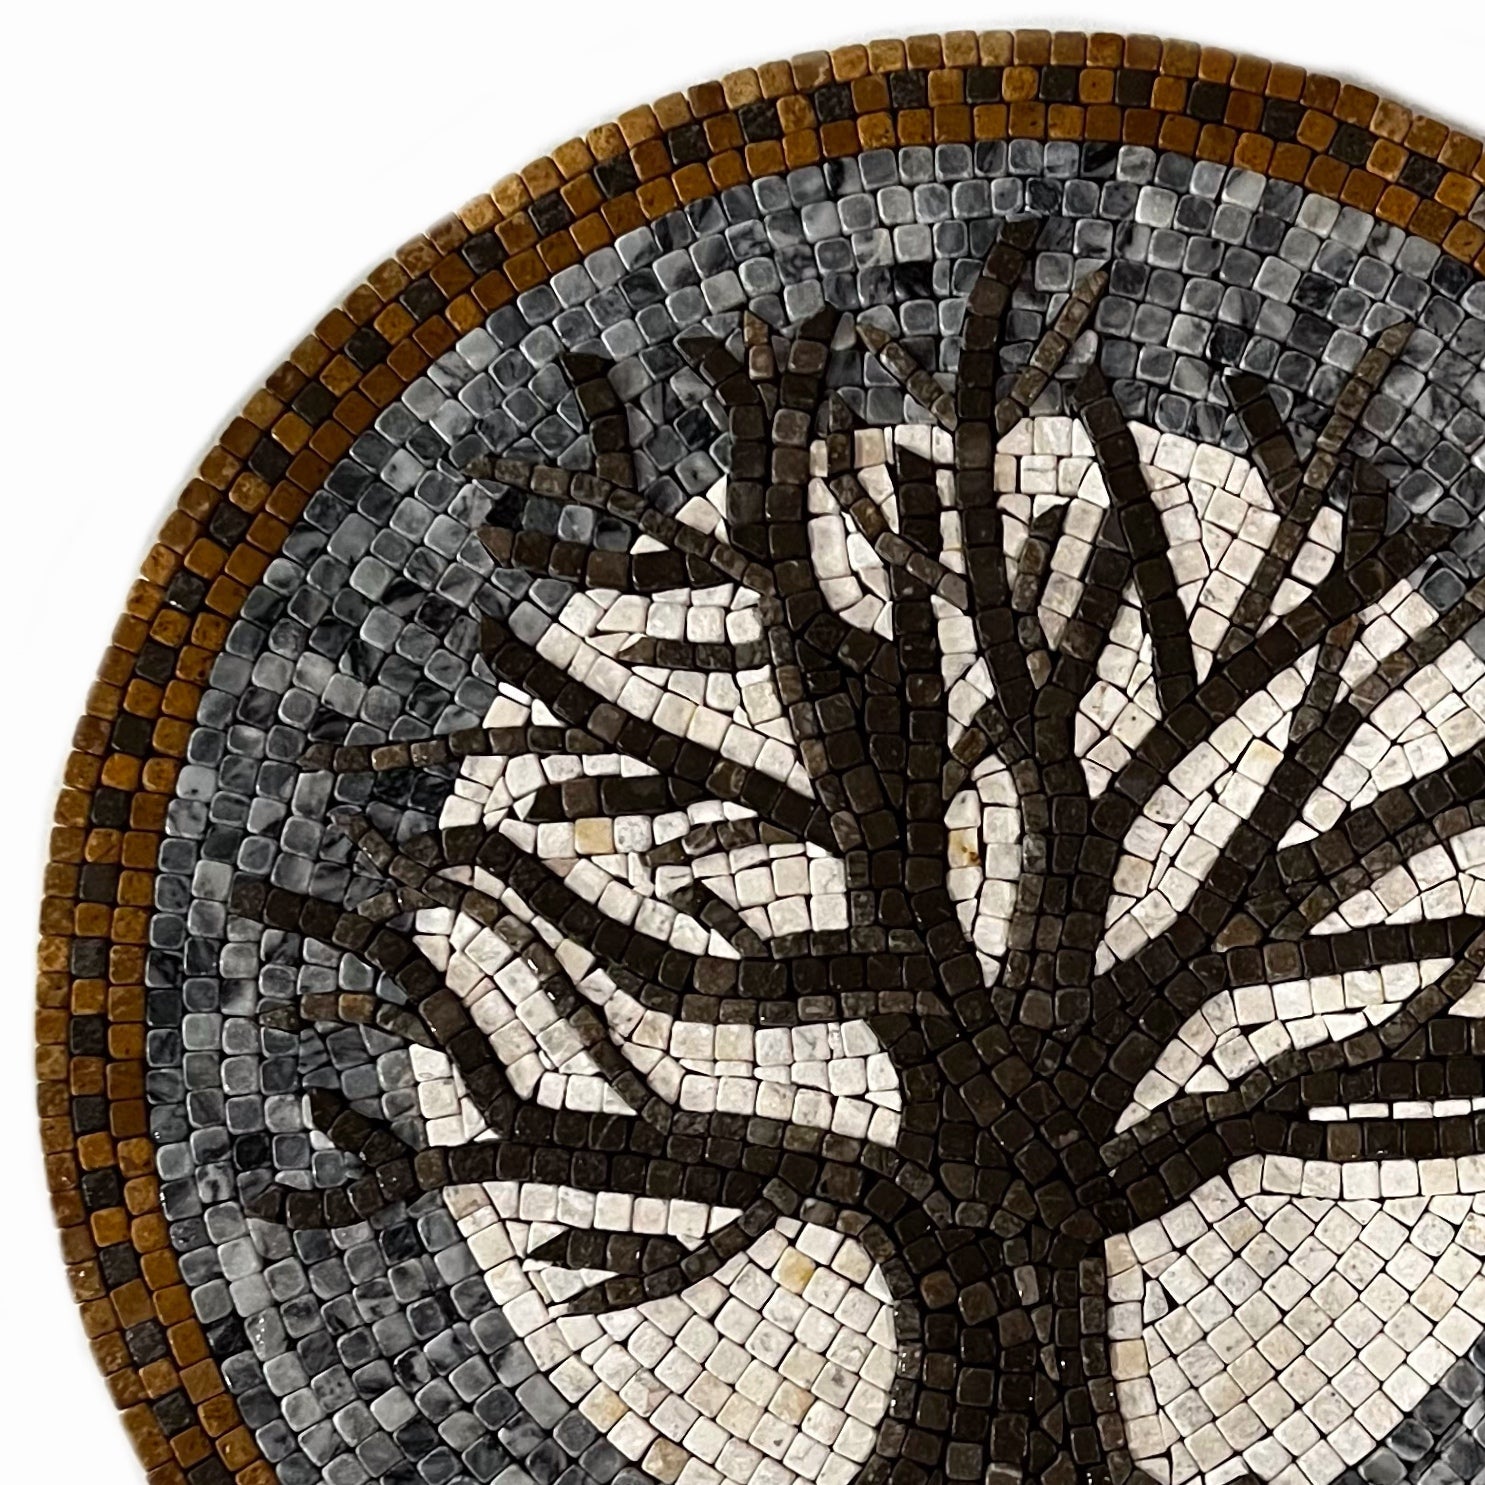 DEATH NIGHT MOON - Mosaic By Qureshi's